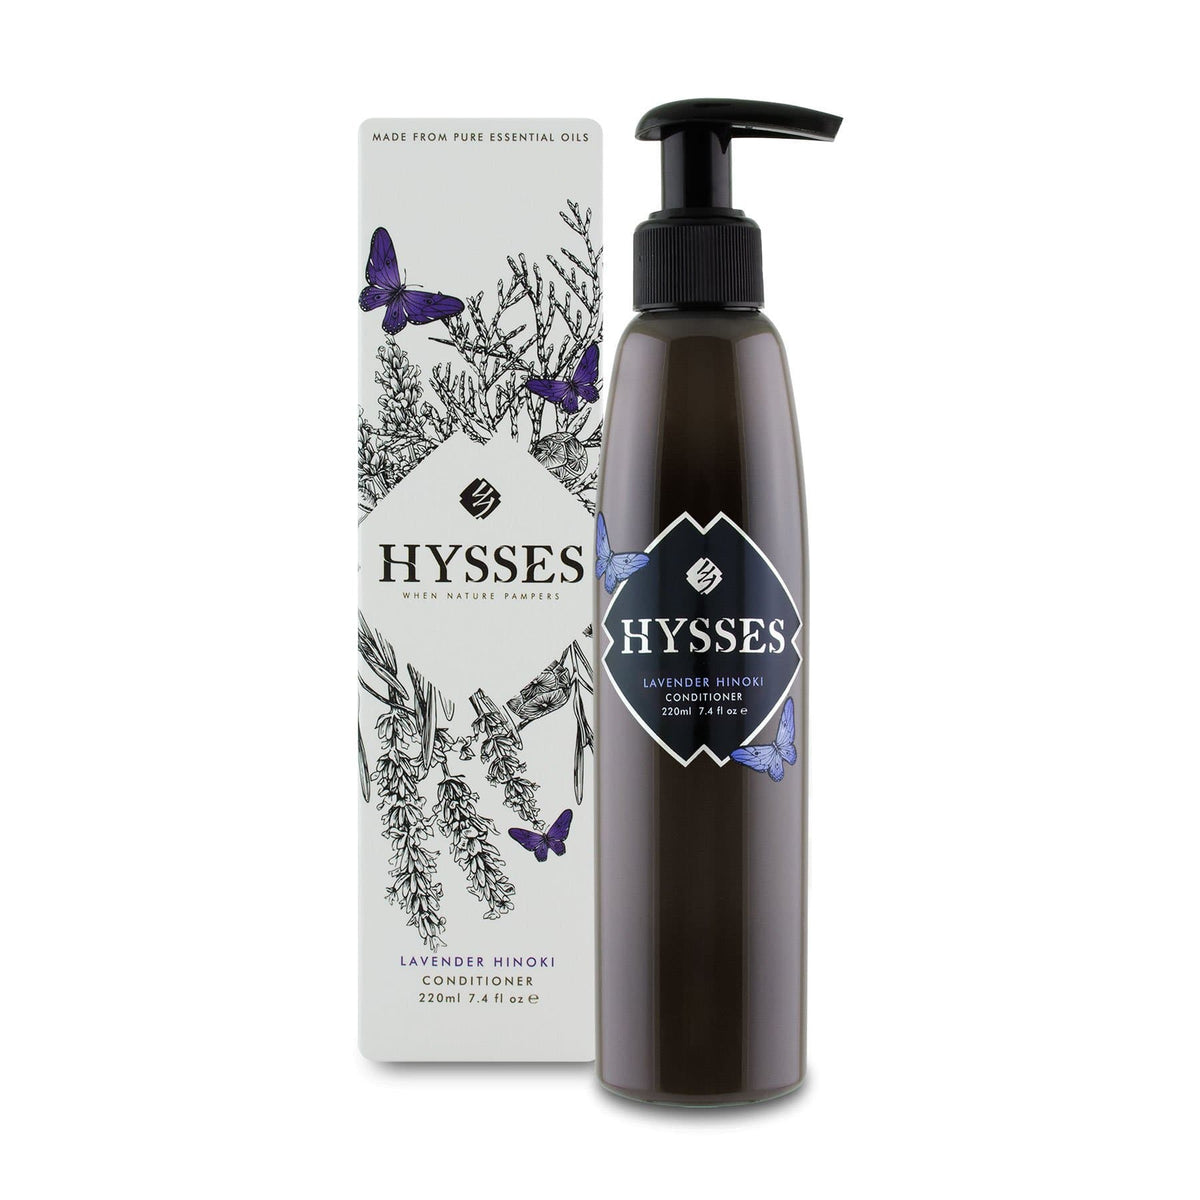 Hysses Hair Care 220ml Conditioner Lavender Hinoki